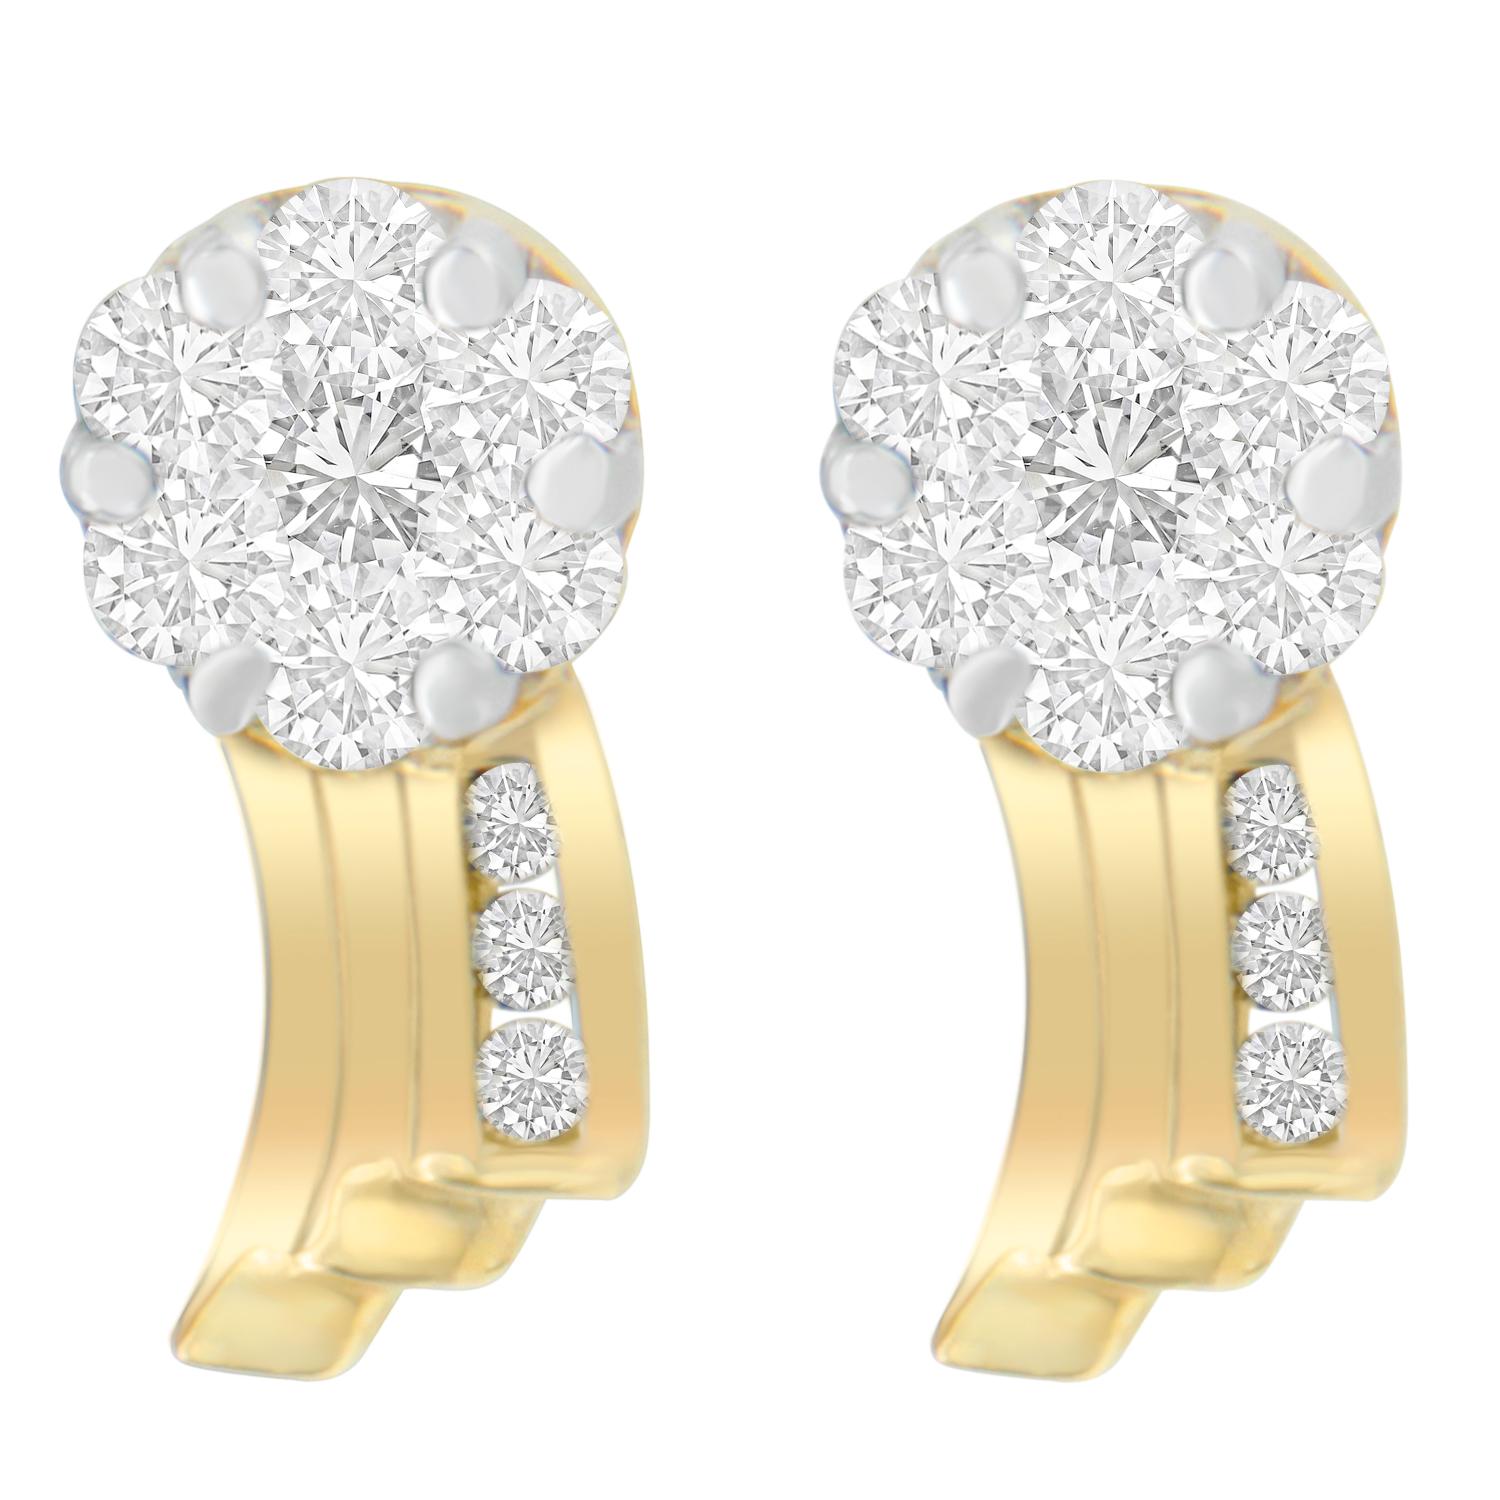 7/8 carat diamond earrings